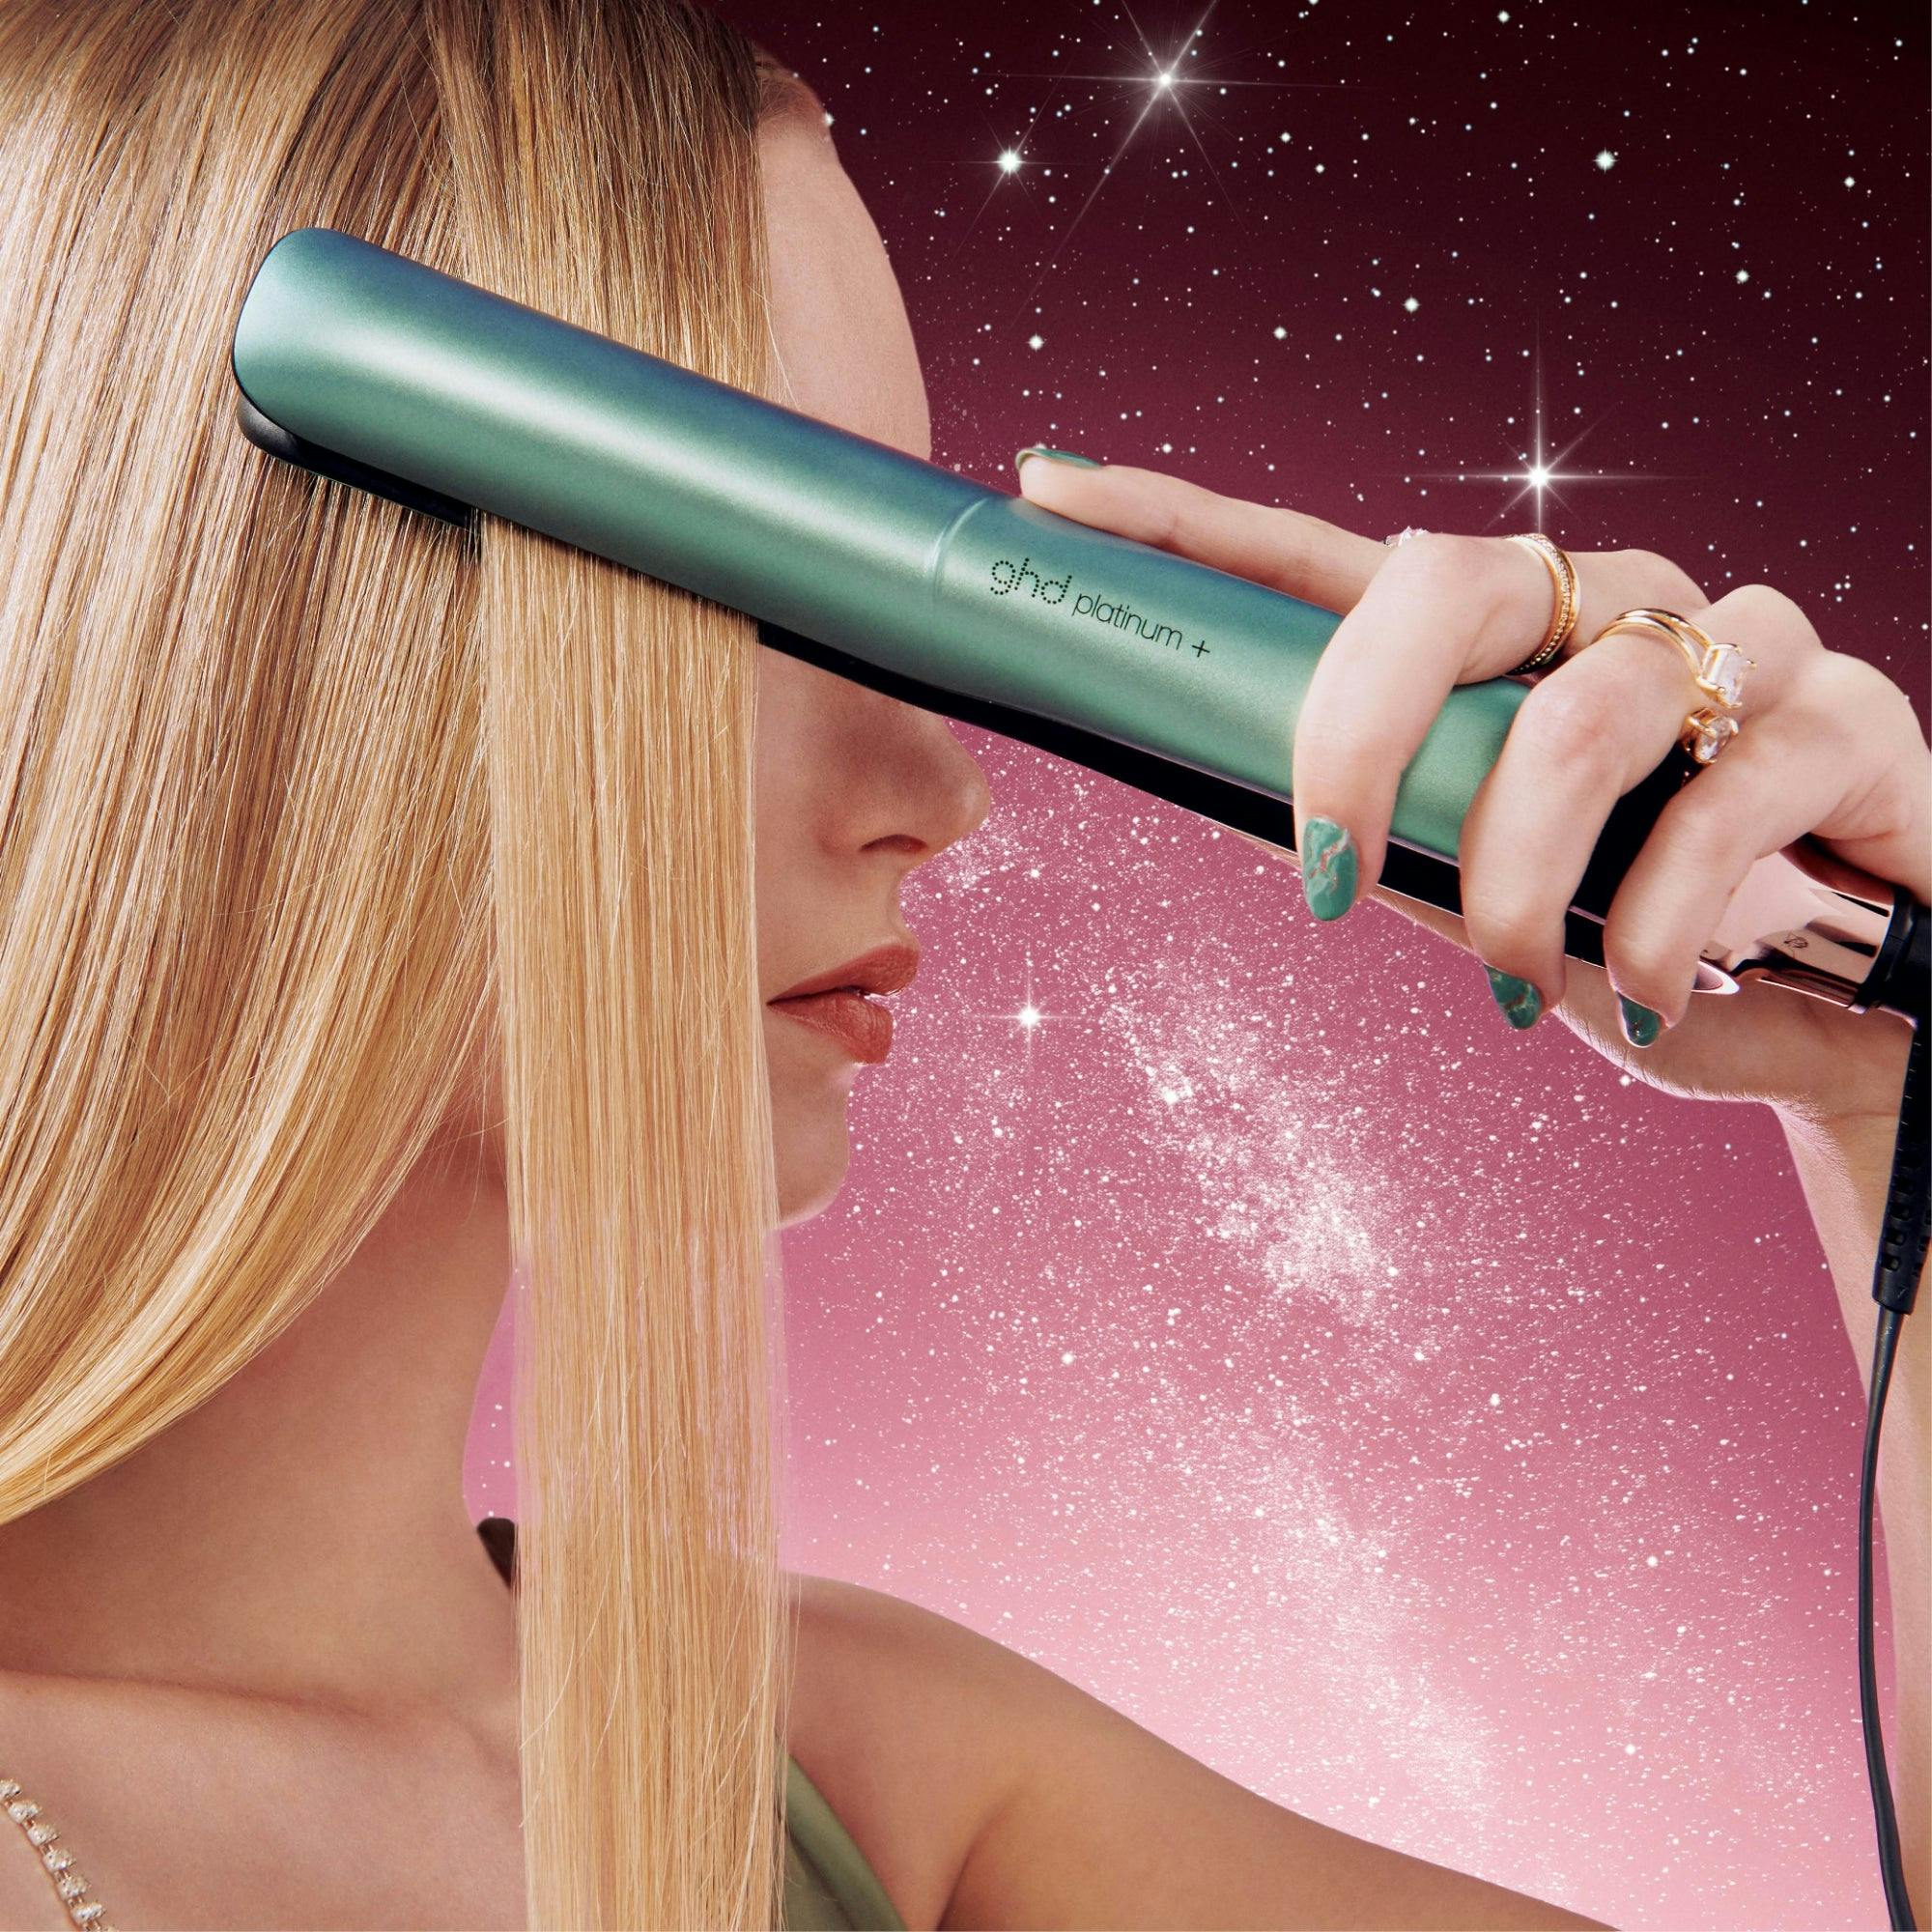 ghd platinum + - Predicts your hair needs – We Do Hair & Beauty Ltd